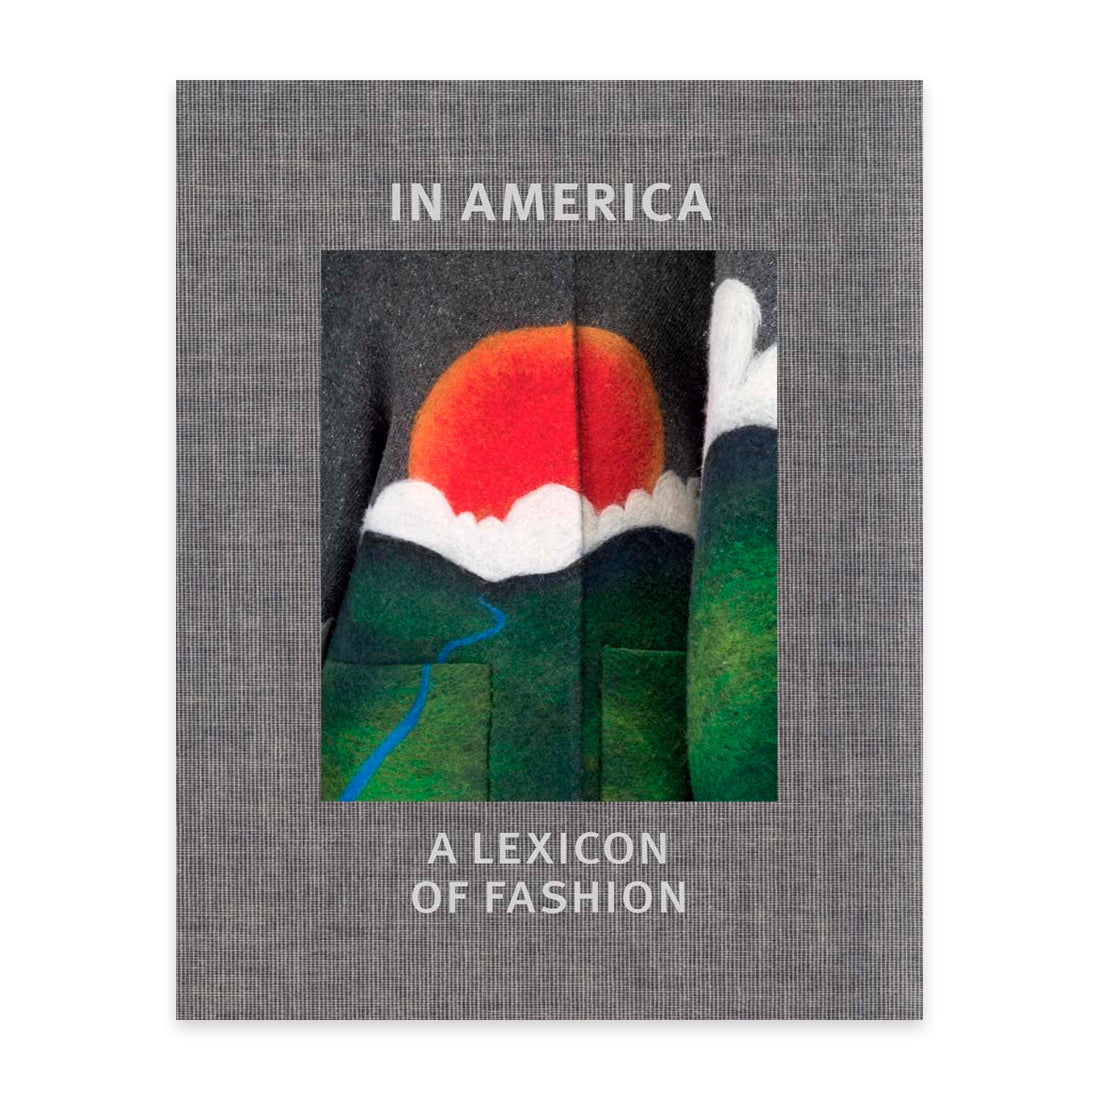 In America - A Lexicon of Fashion